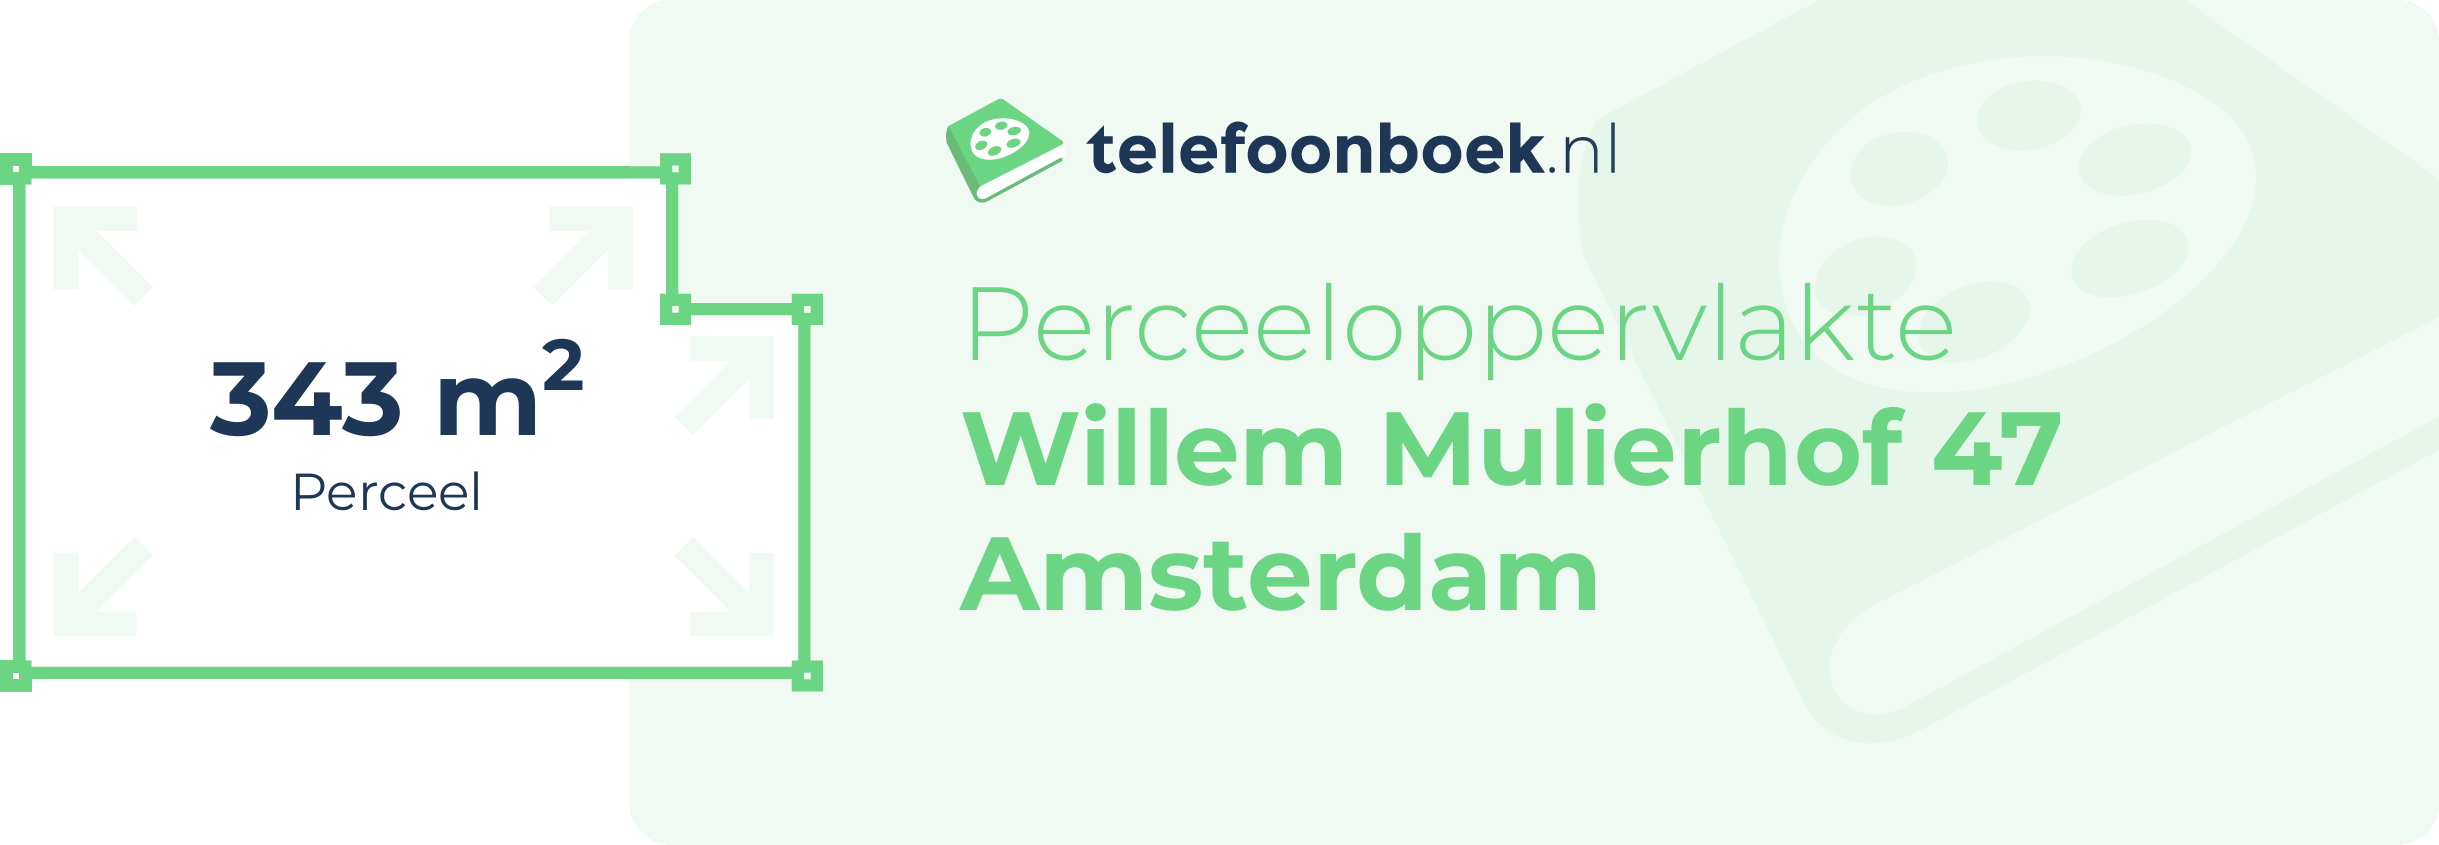 Perceeloppervlakte Willem Mulierhof 47 Amsterdam